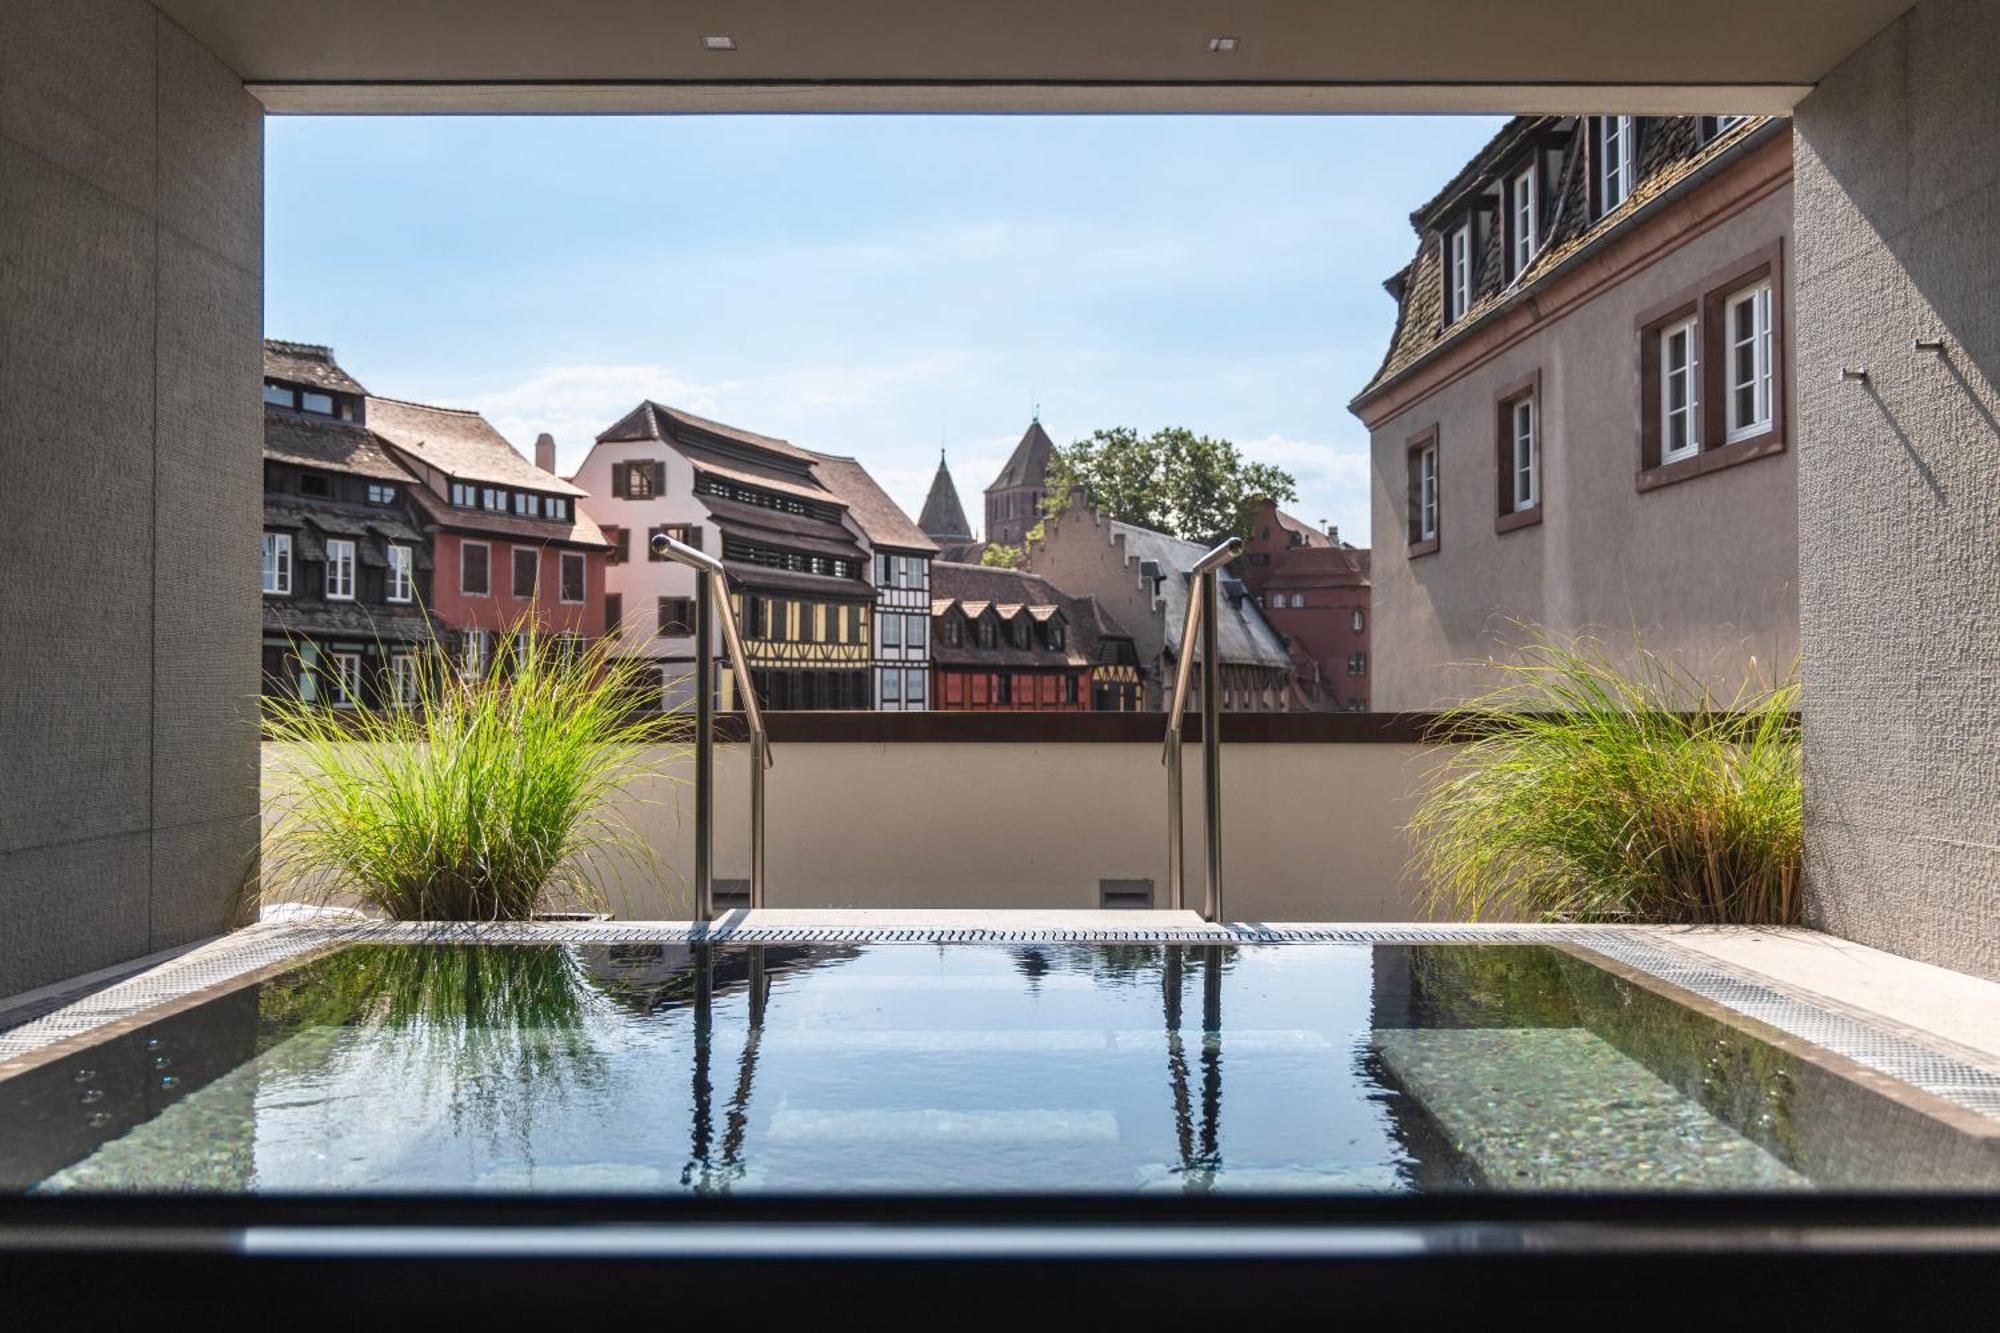 Hotel & Spa Regent Petite France Straßburg Exterior foto